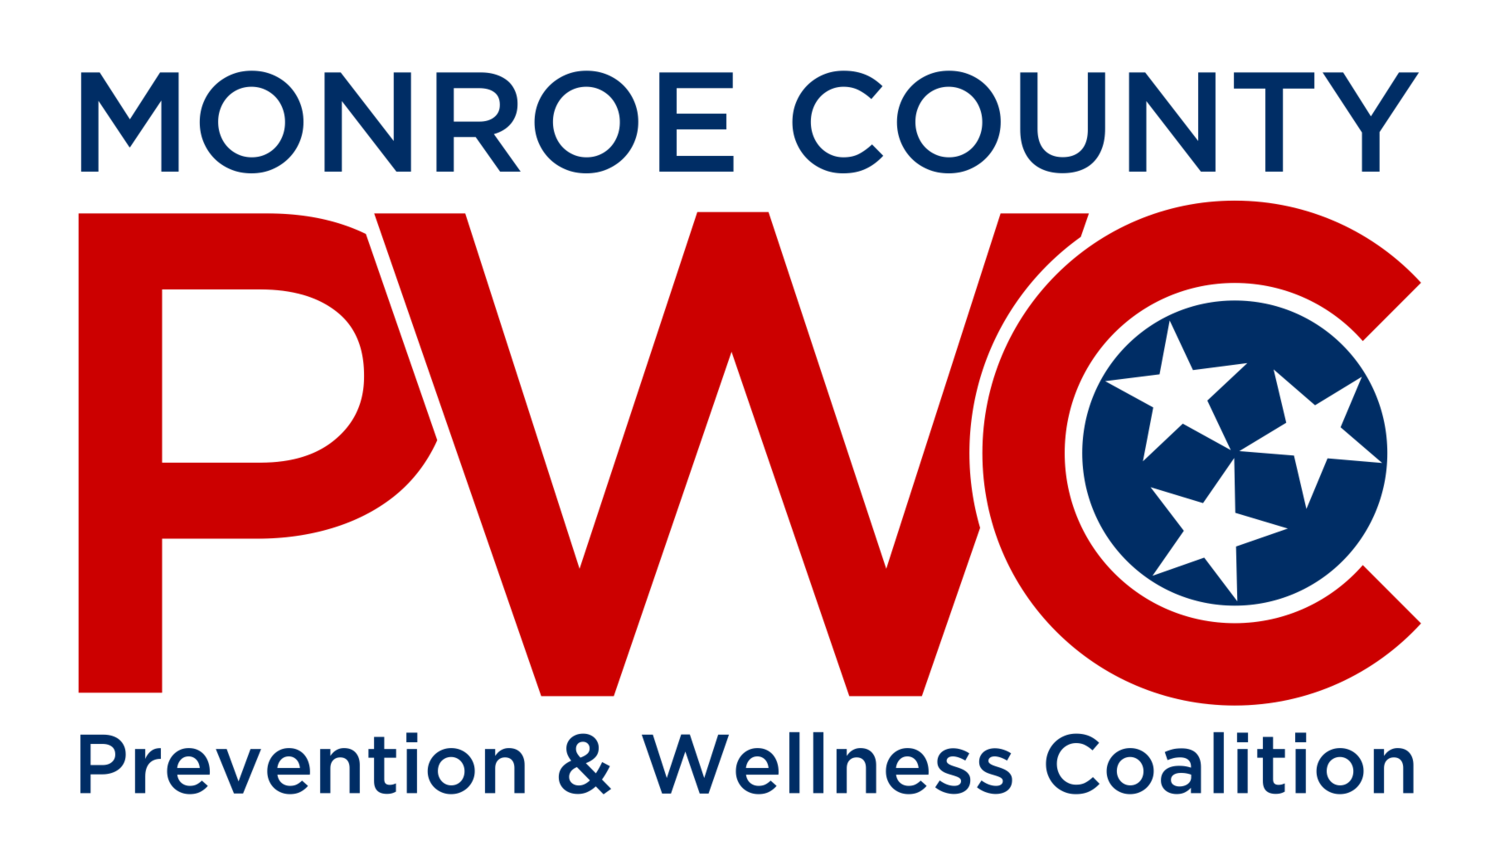 Monroe County Prevention & Wellness Coalition